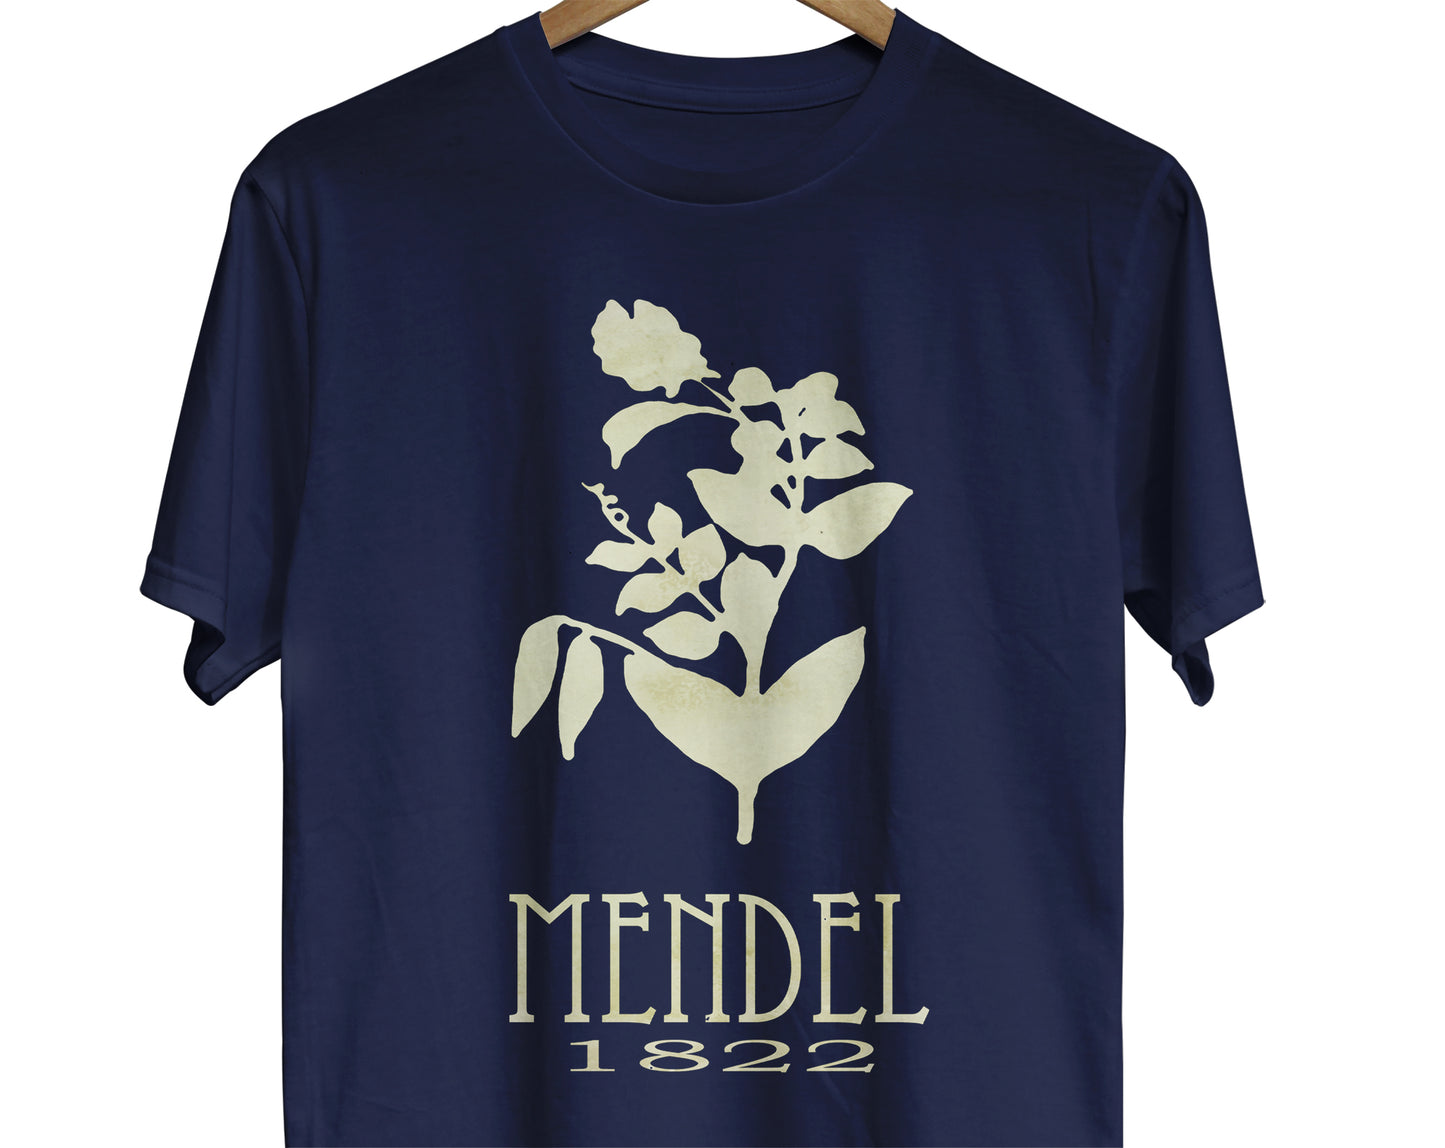 Gregor Mendel genetics t-shirt with pea plant design for a science teacher